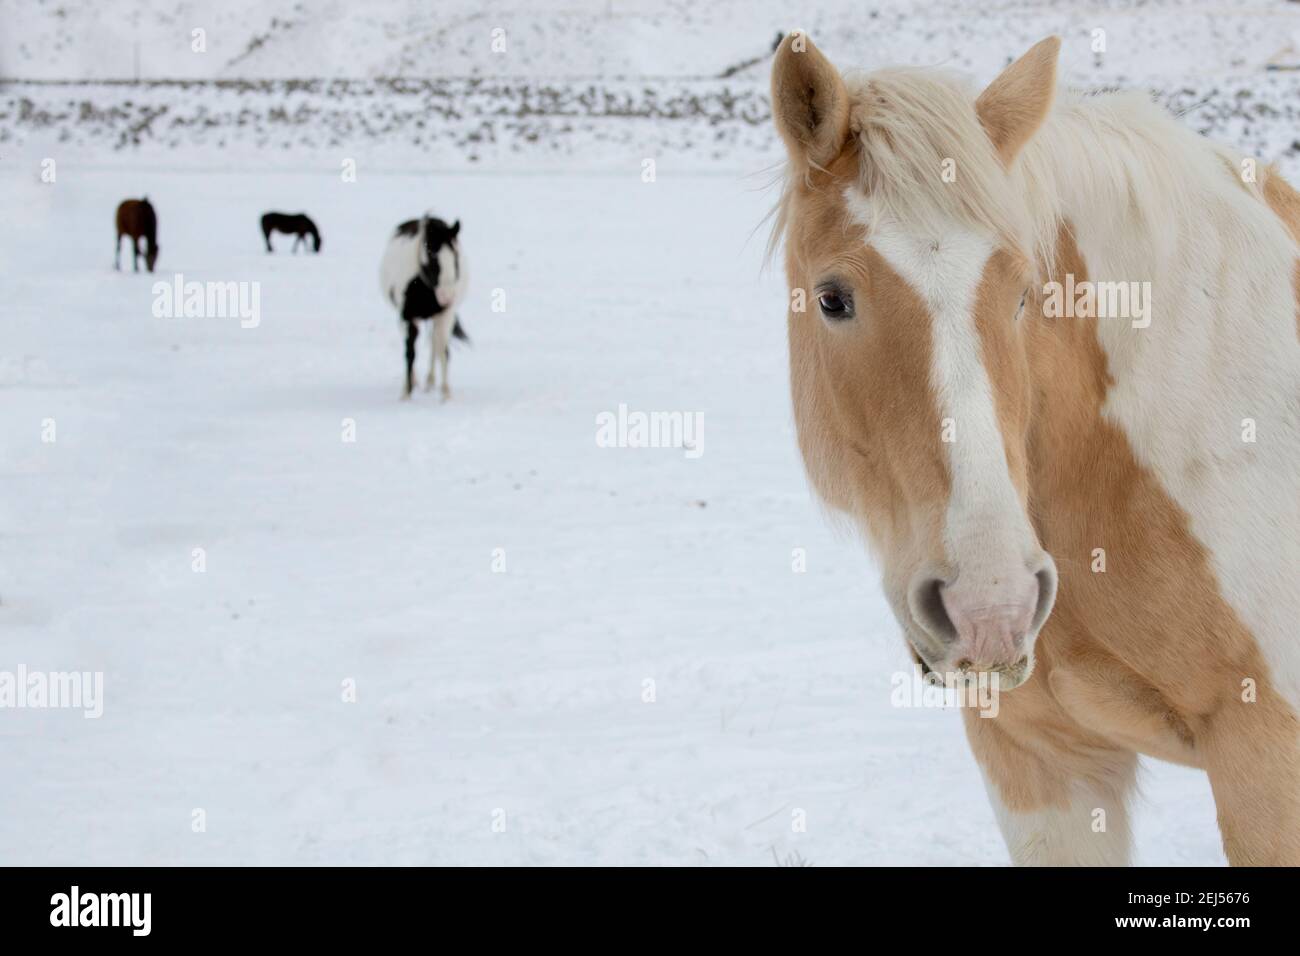 USA, Montana, Gardiner. Palomino malen Pferd mit zotteligen Wintermäntel im Schnee. Stockfoto